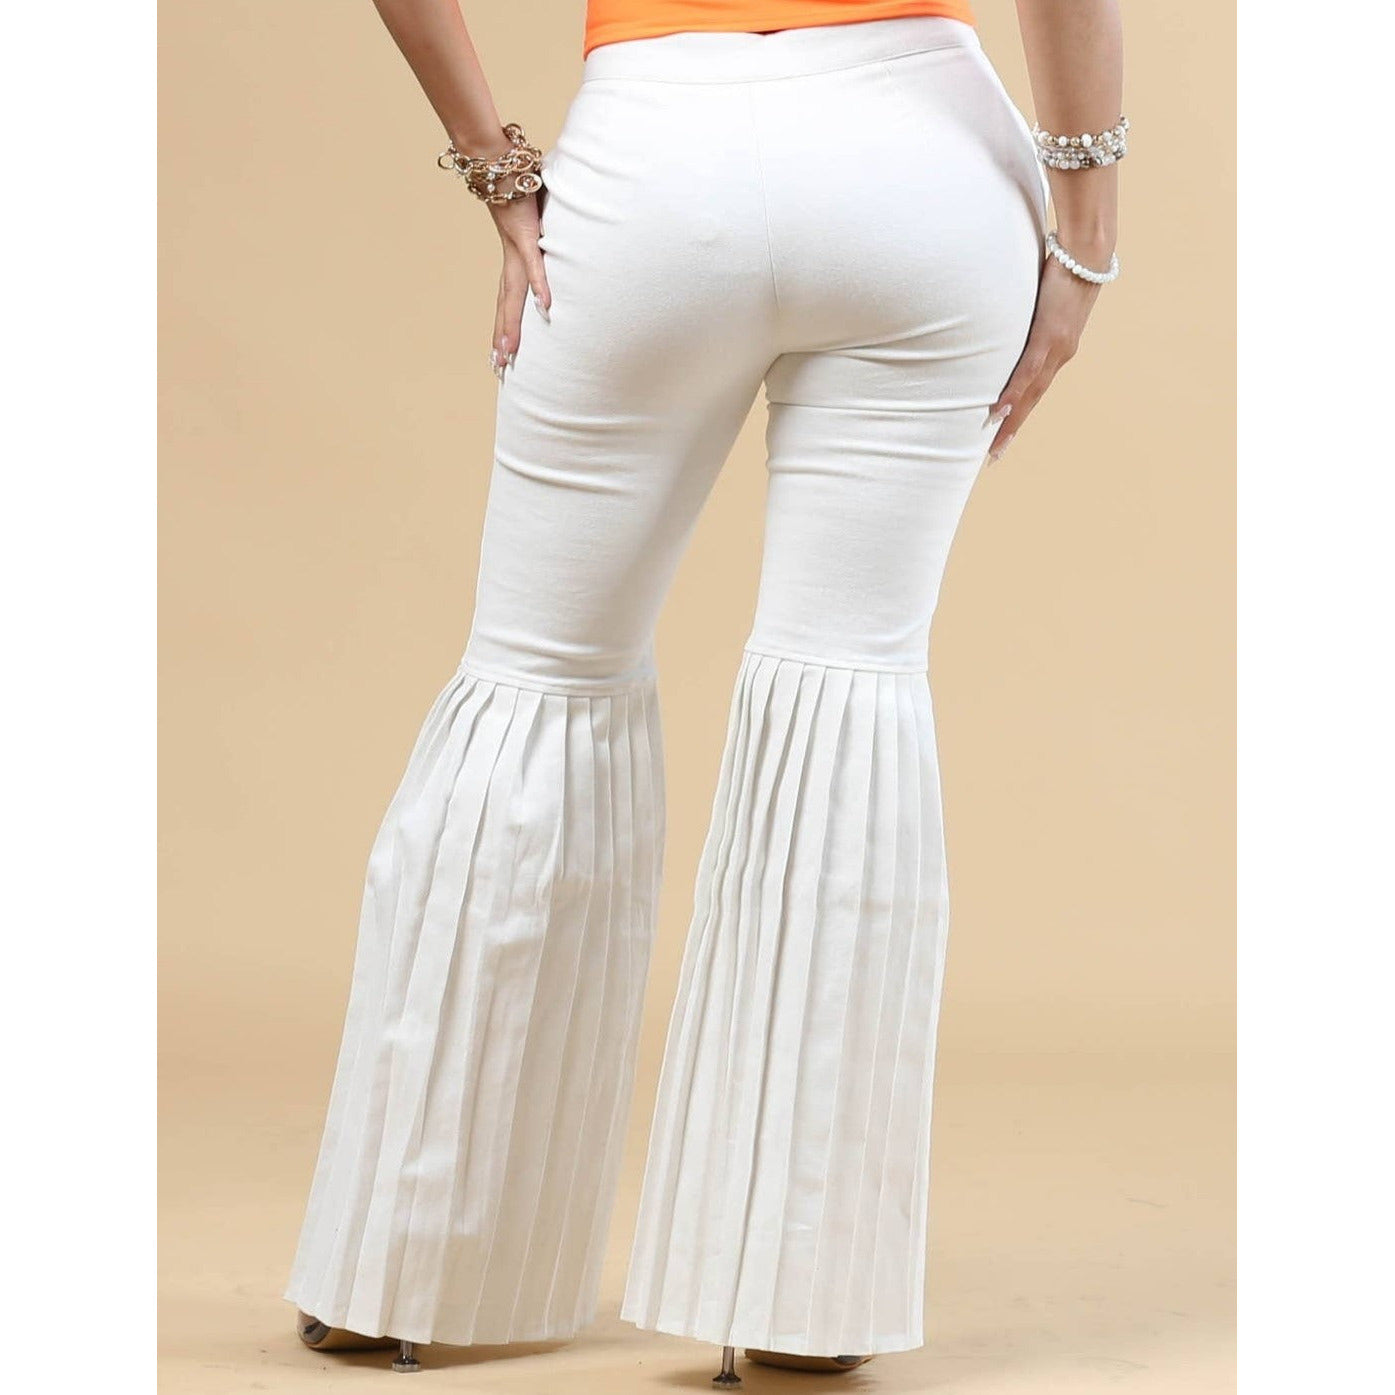 Pleats on Fleek Flare Pants - Ariya's Apparel and Accessories